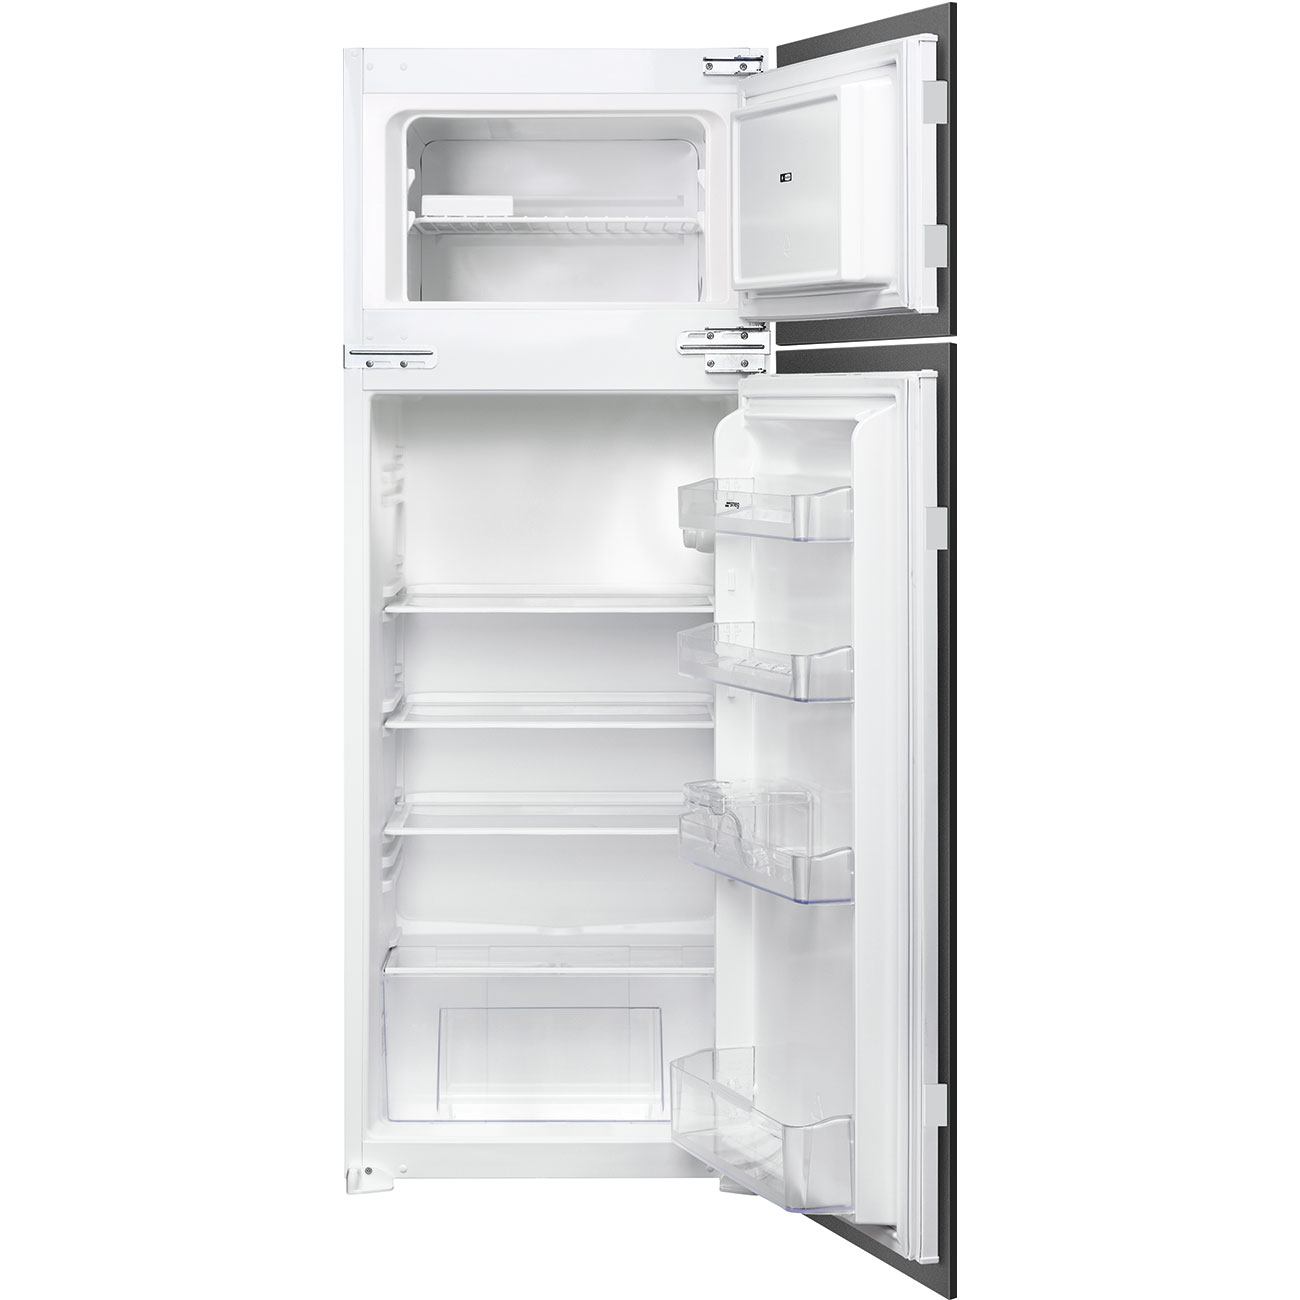 Top Mount Built-in refrigerator - Smeg_1